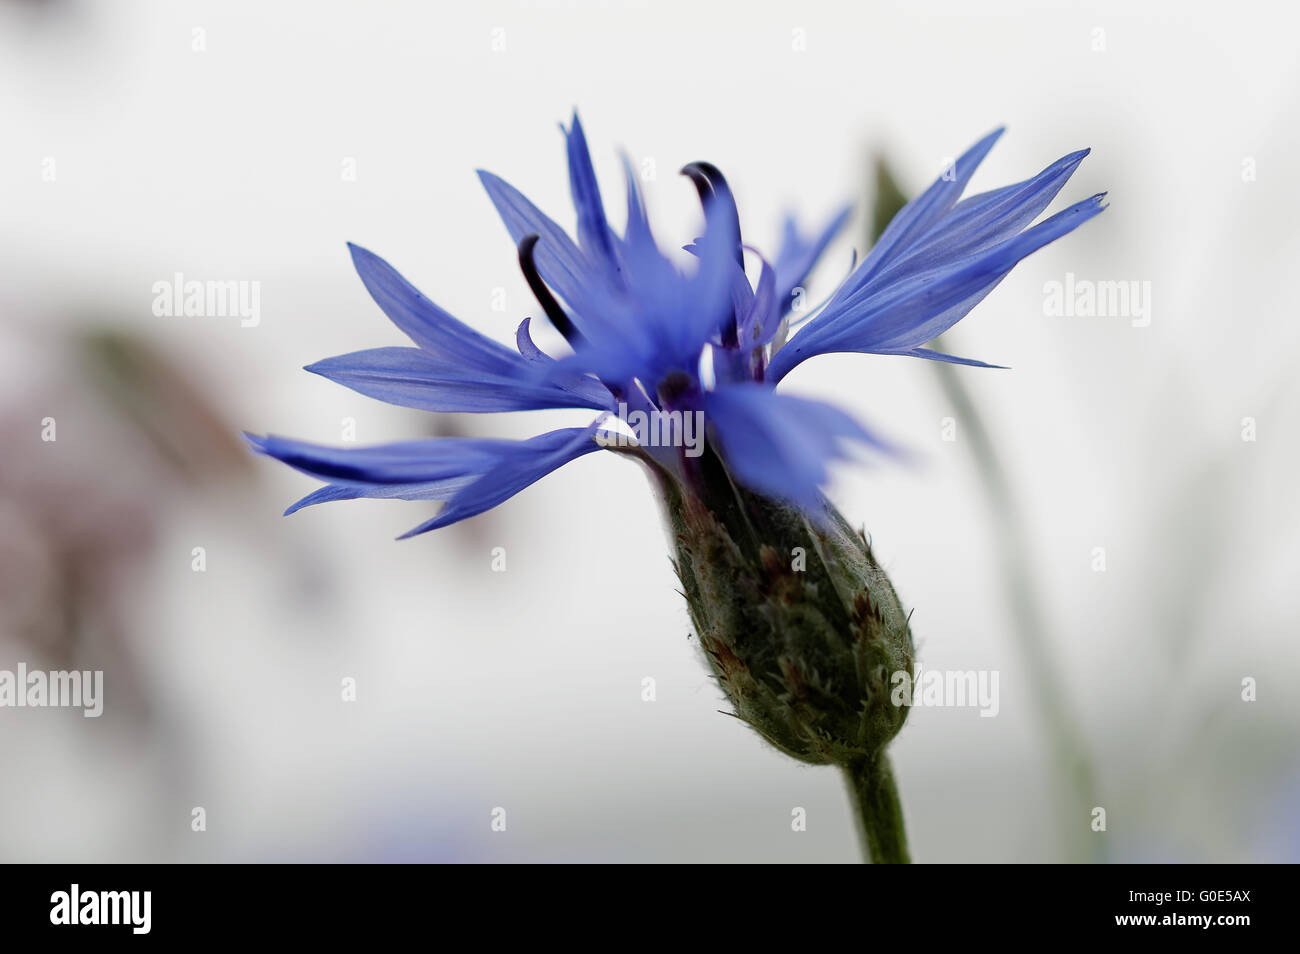 Bluebottle (Centaurea cyans), Cornflower Stock Photo